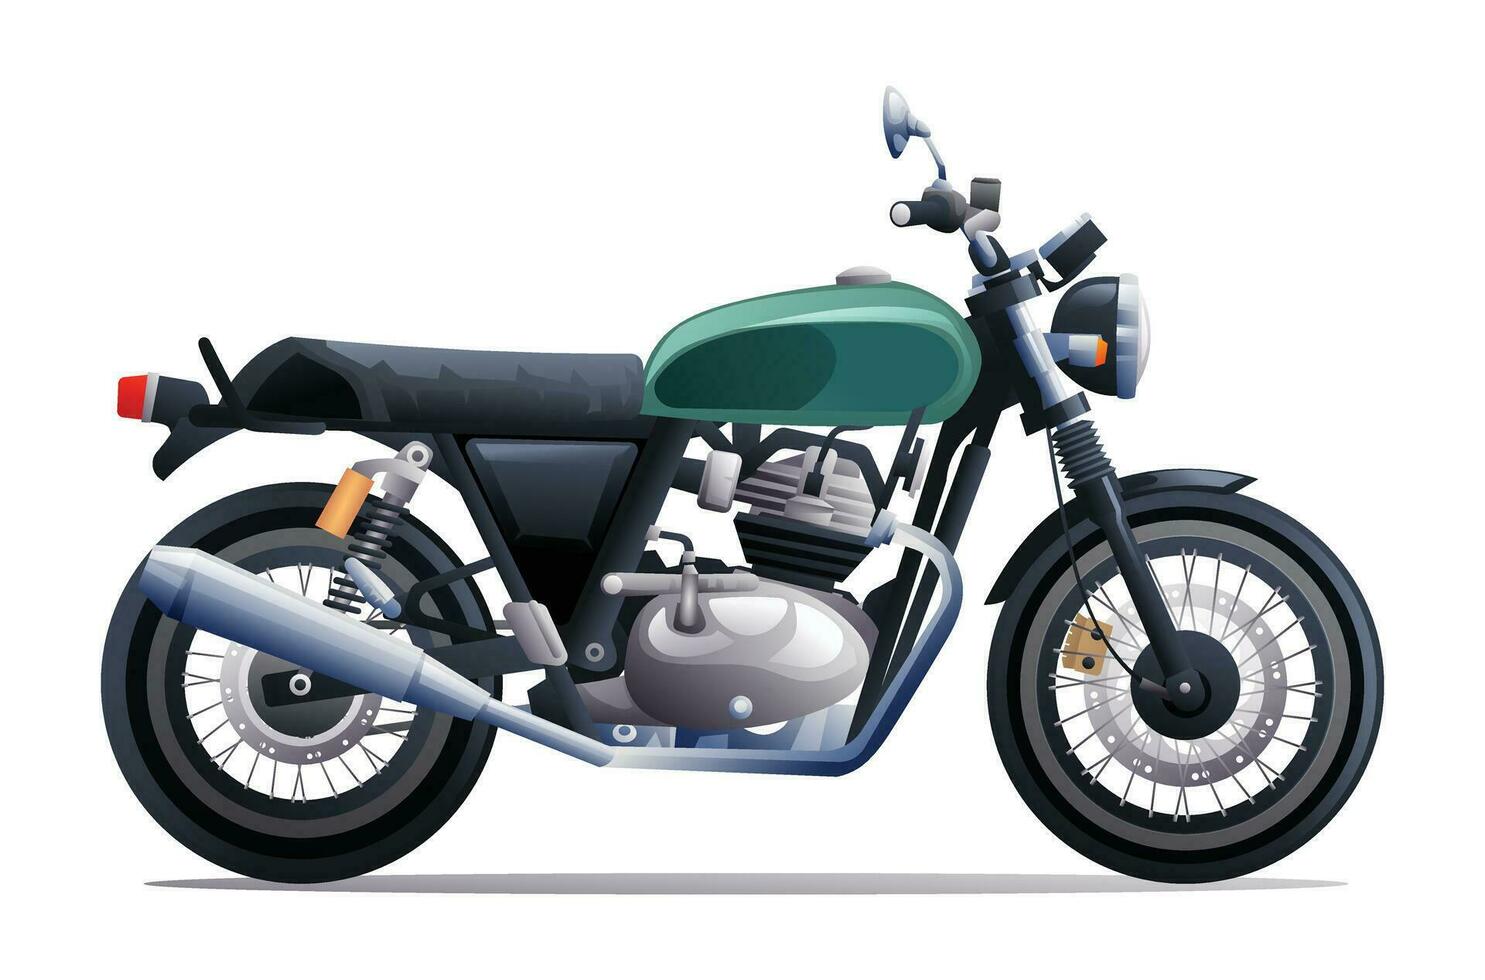 Retro vintage motorcycle vector illustration isolated on white background